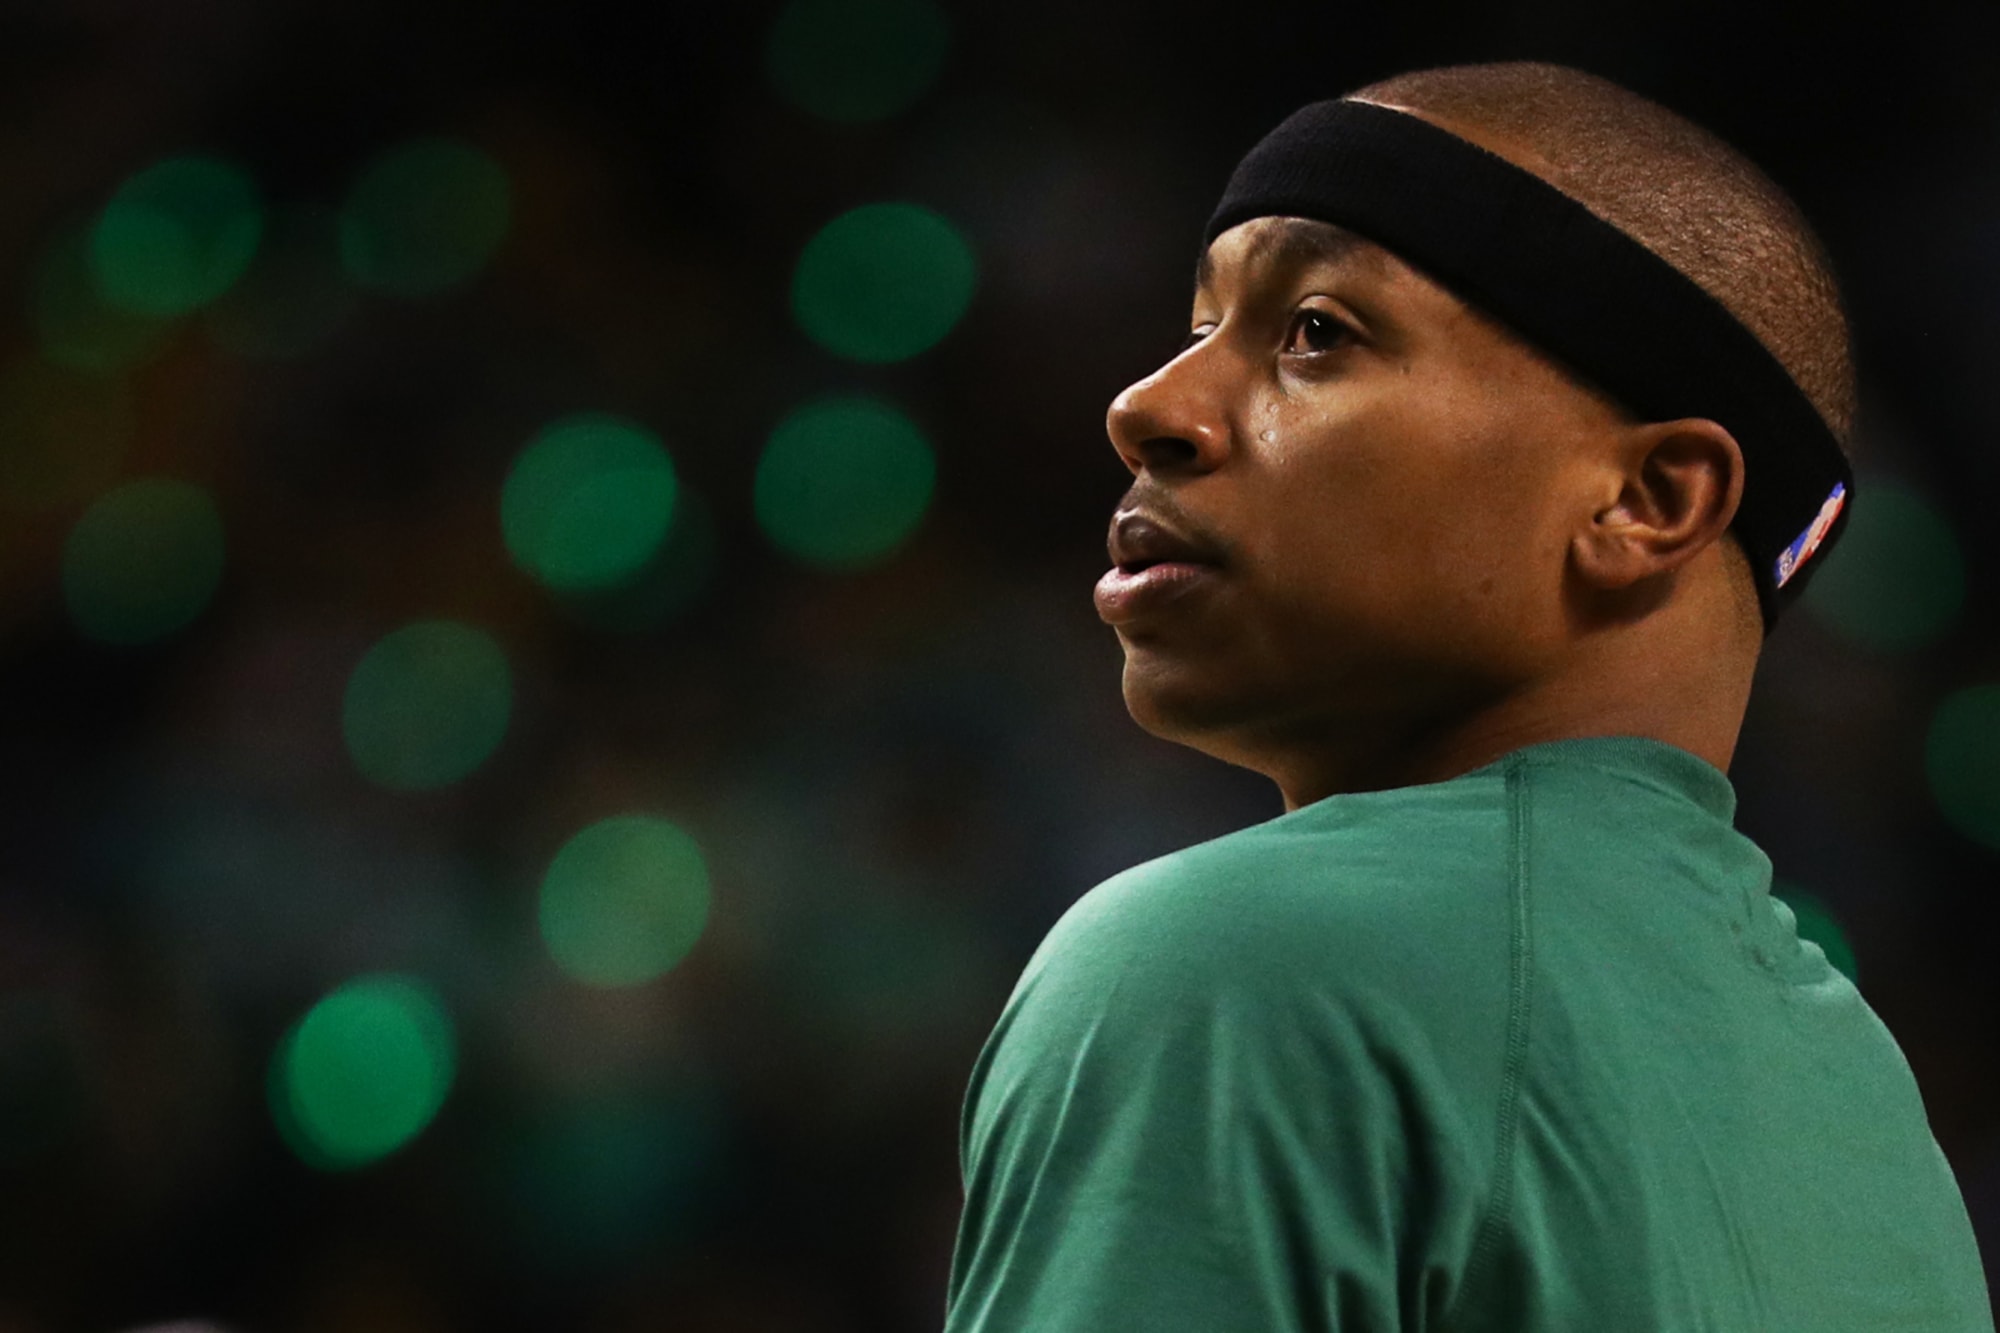 Isaiah Thomas all in to help Celtics improve – Boston Herald